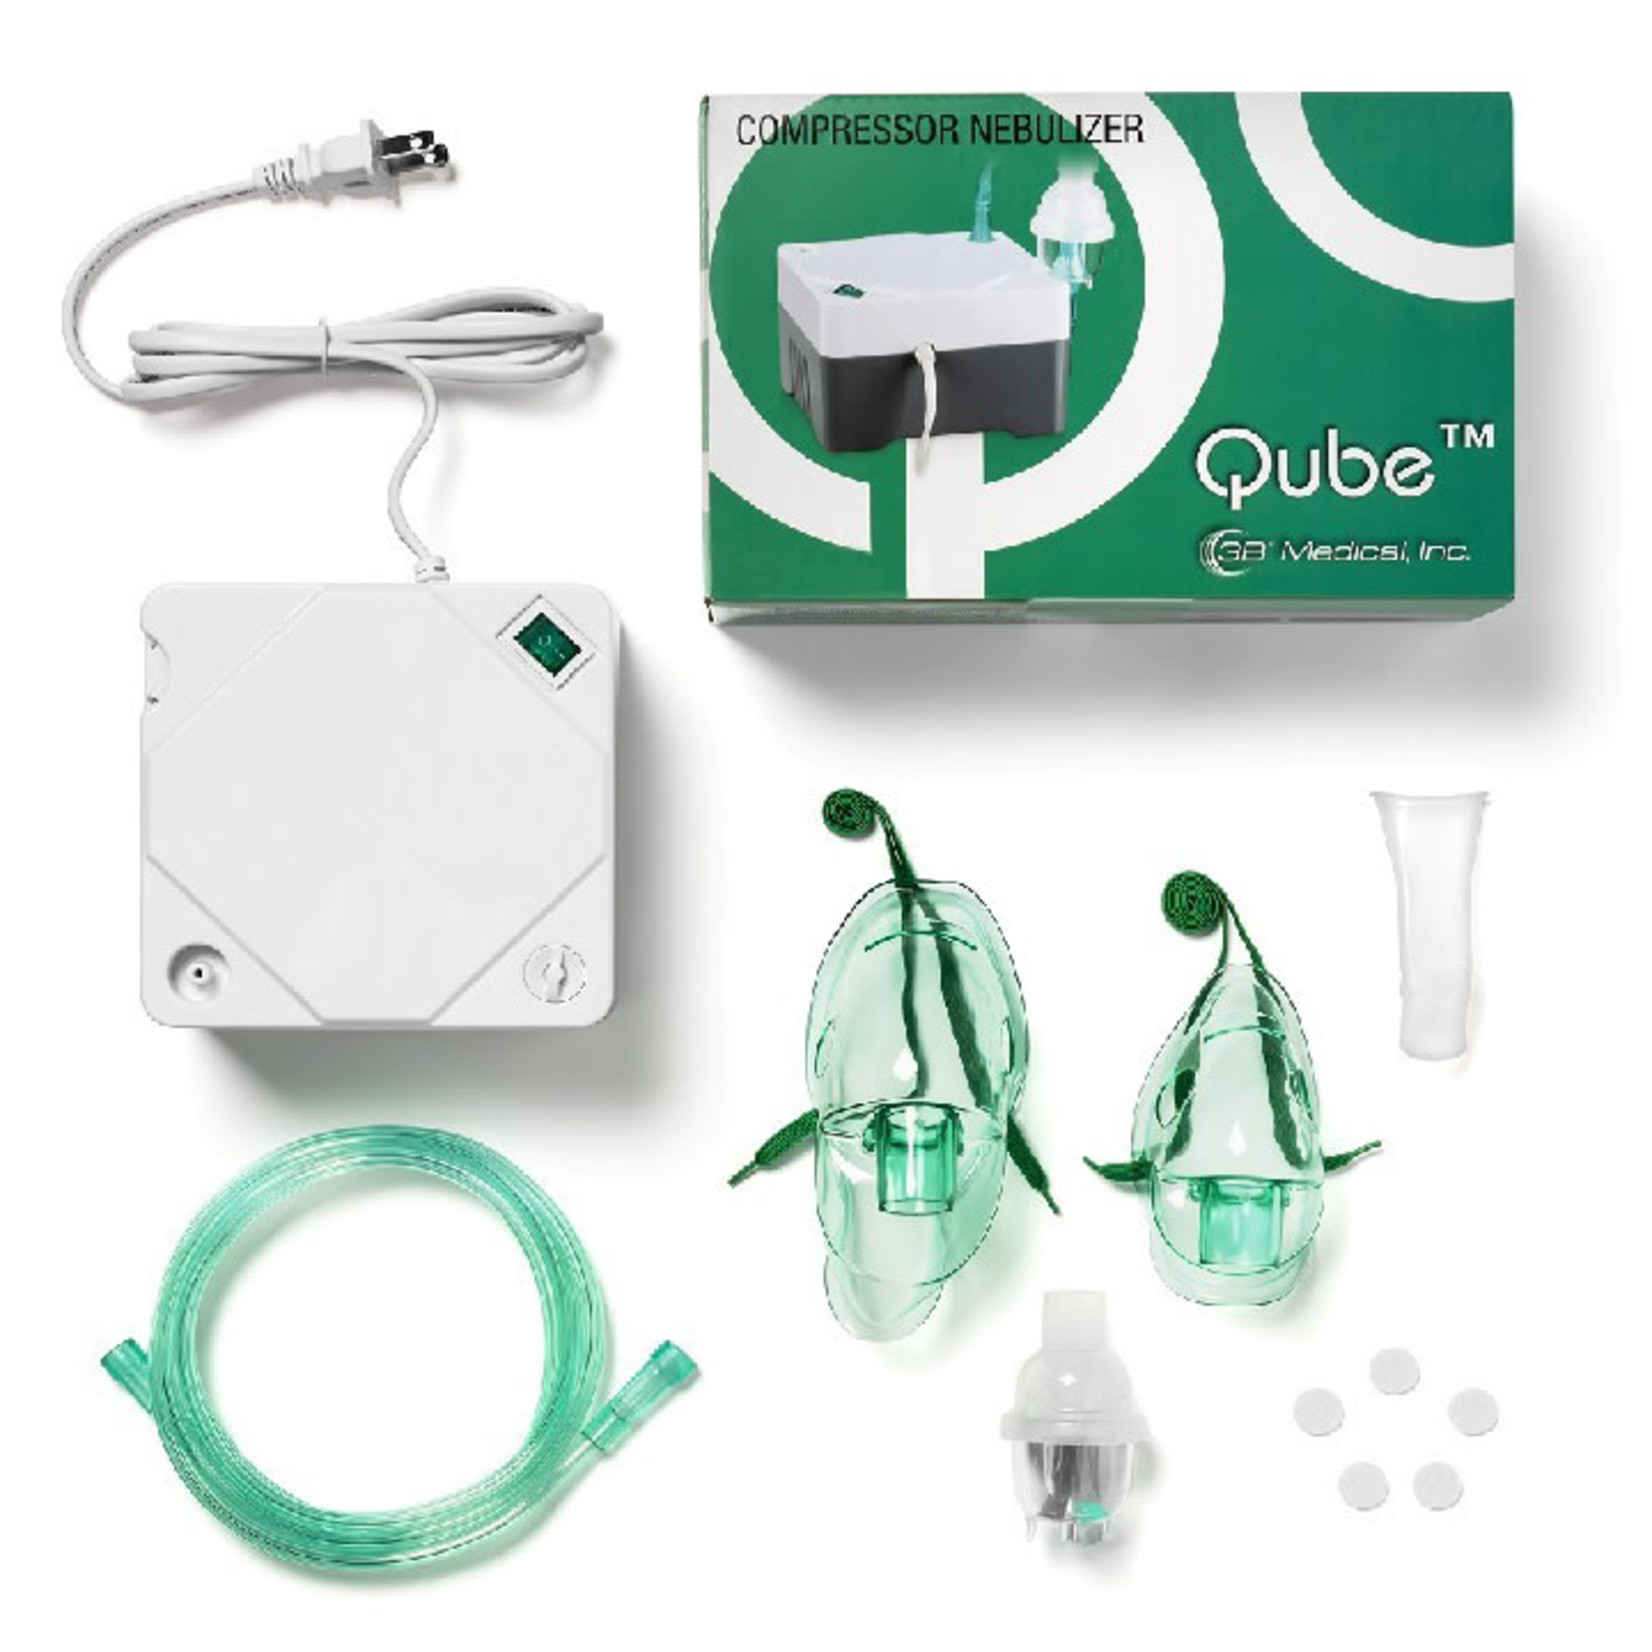 3B Medical Qube Nebulizer